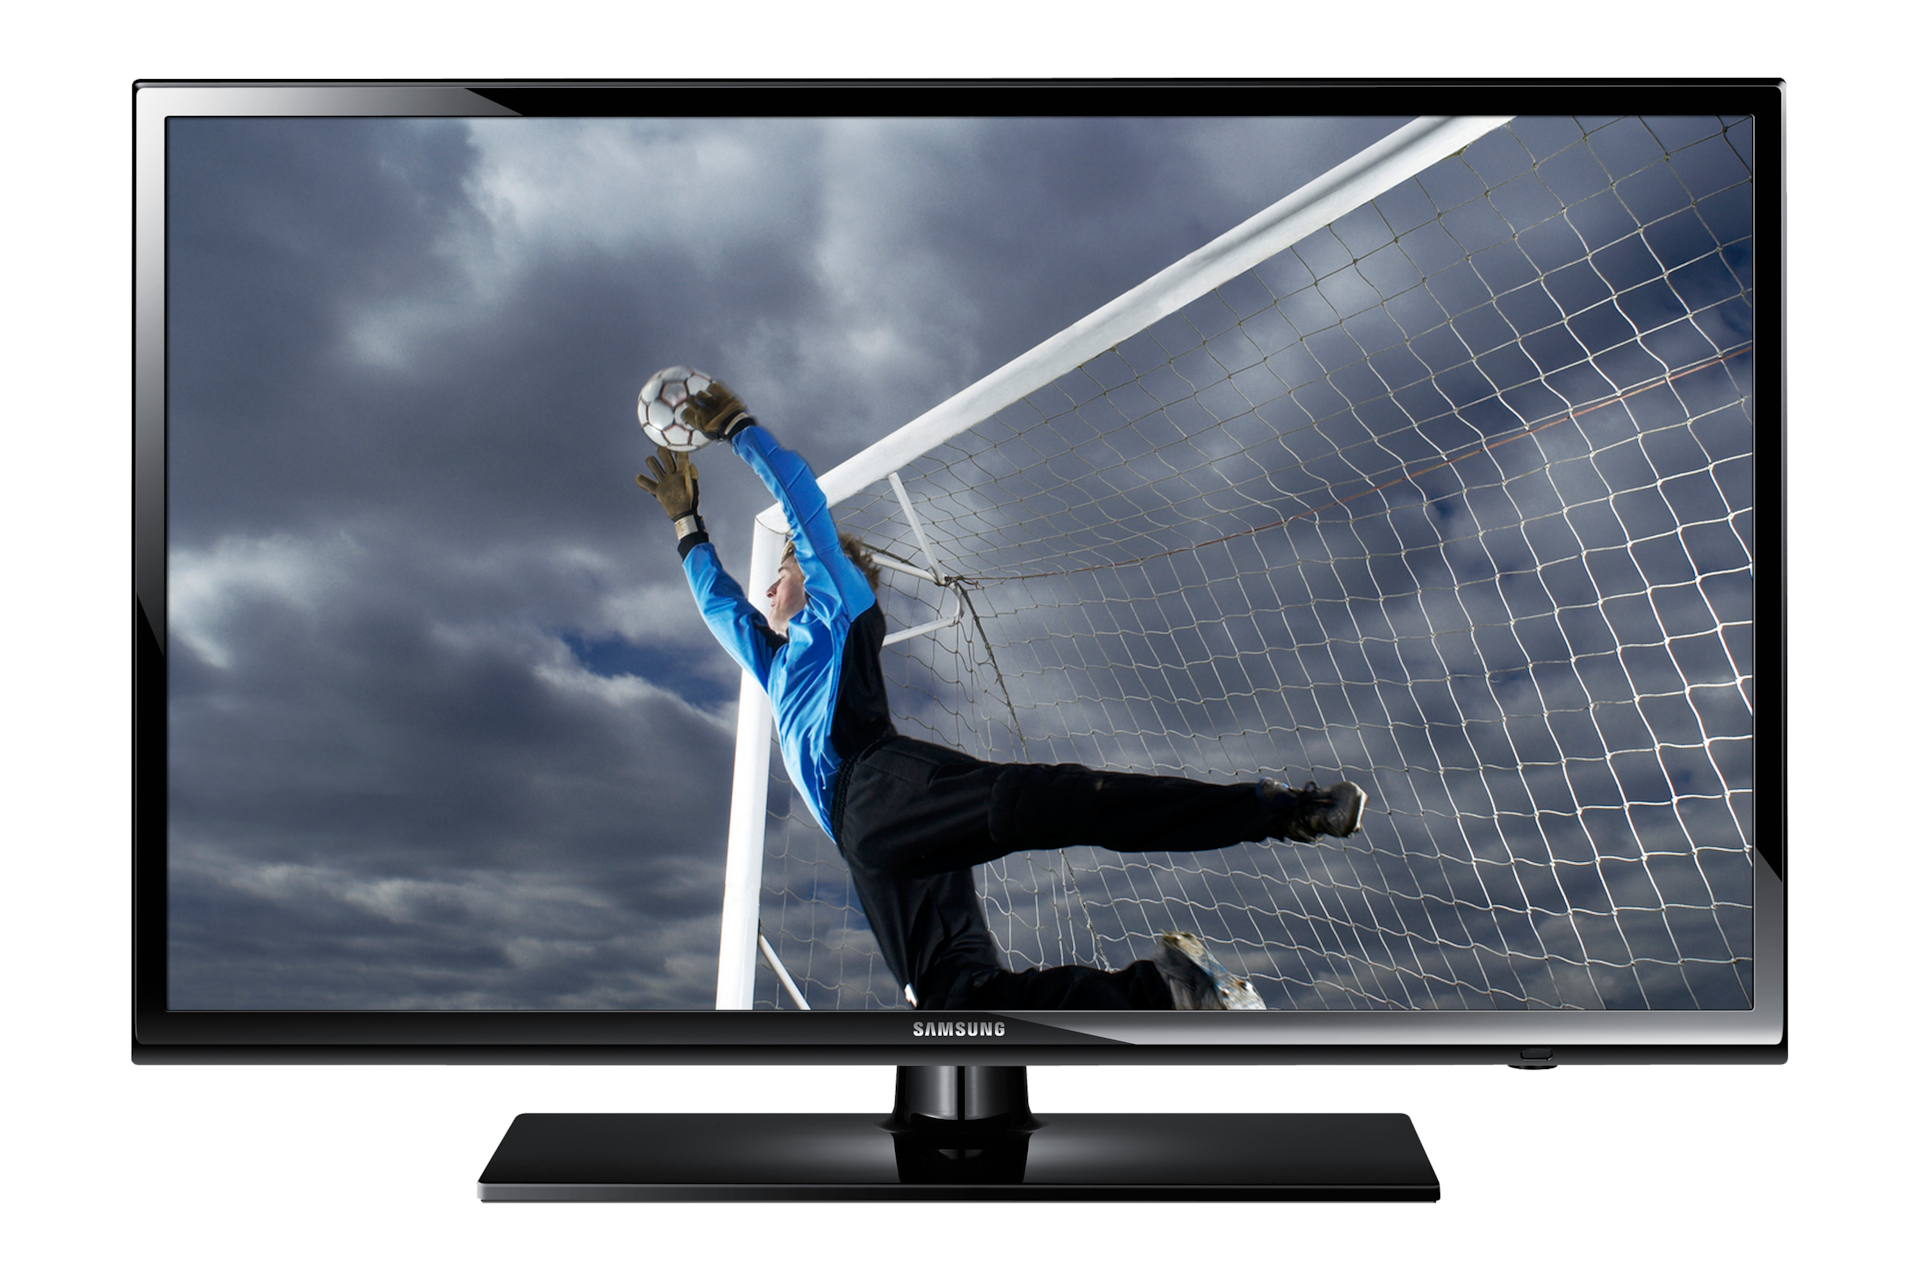 Samsung 32 Inch HD Flat TV Series 4 - Price & Specs | Samsung India